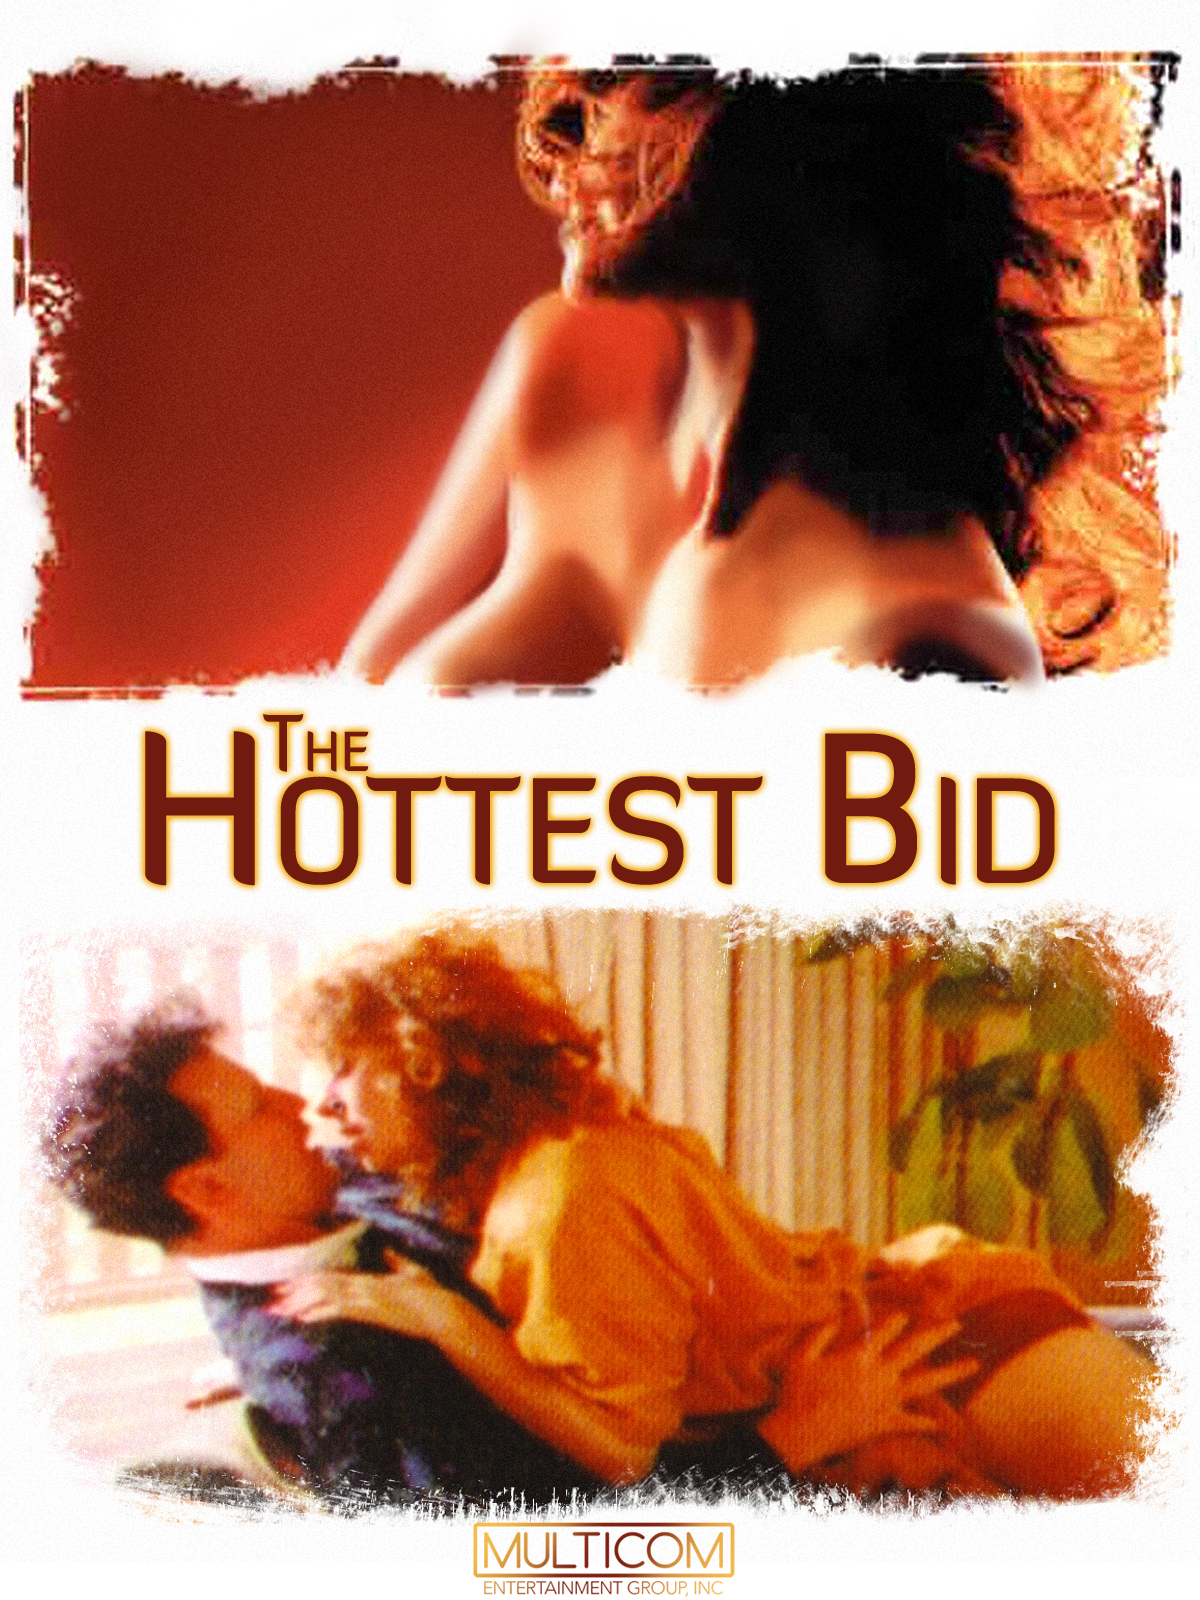 The Hottest Bid (1995) Screenshot 1 